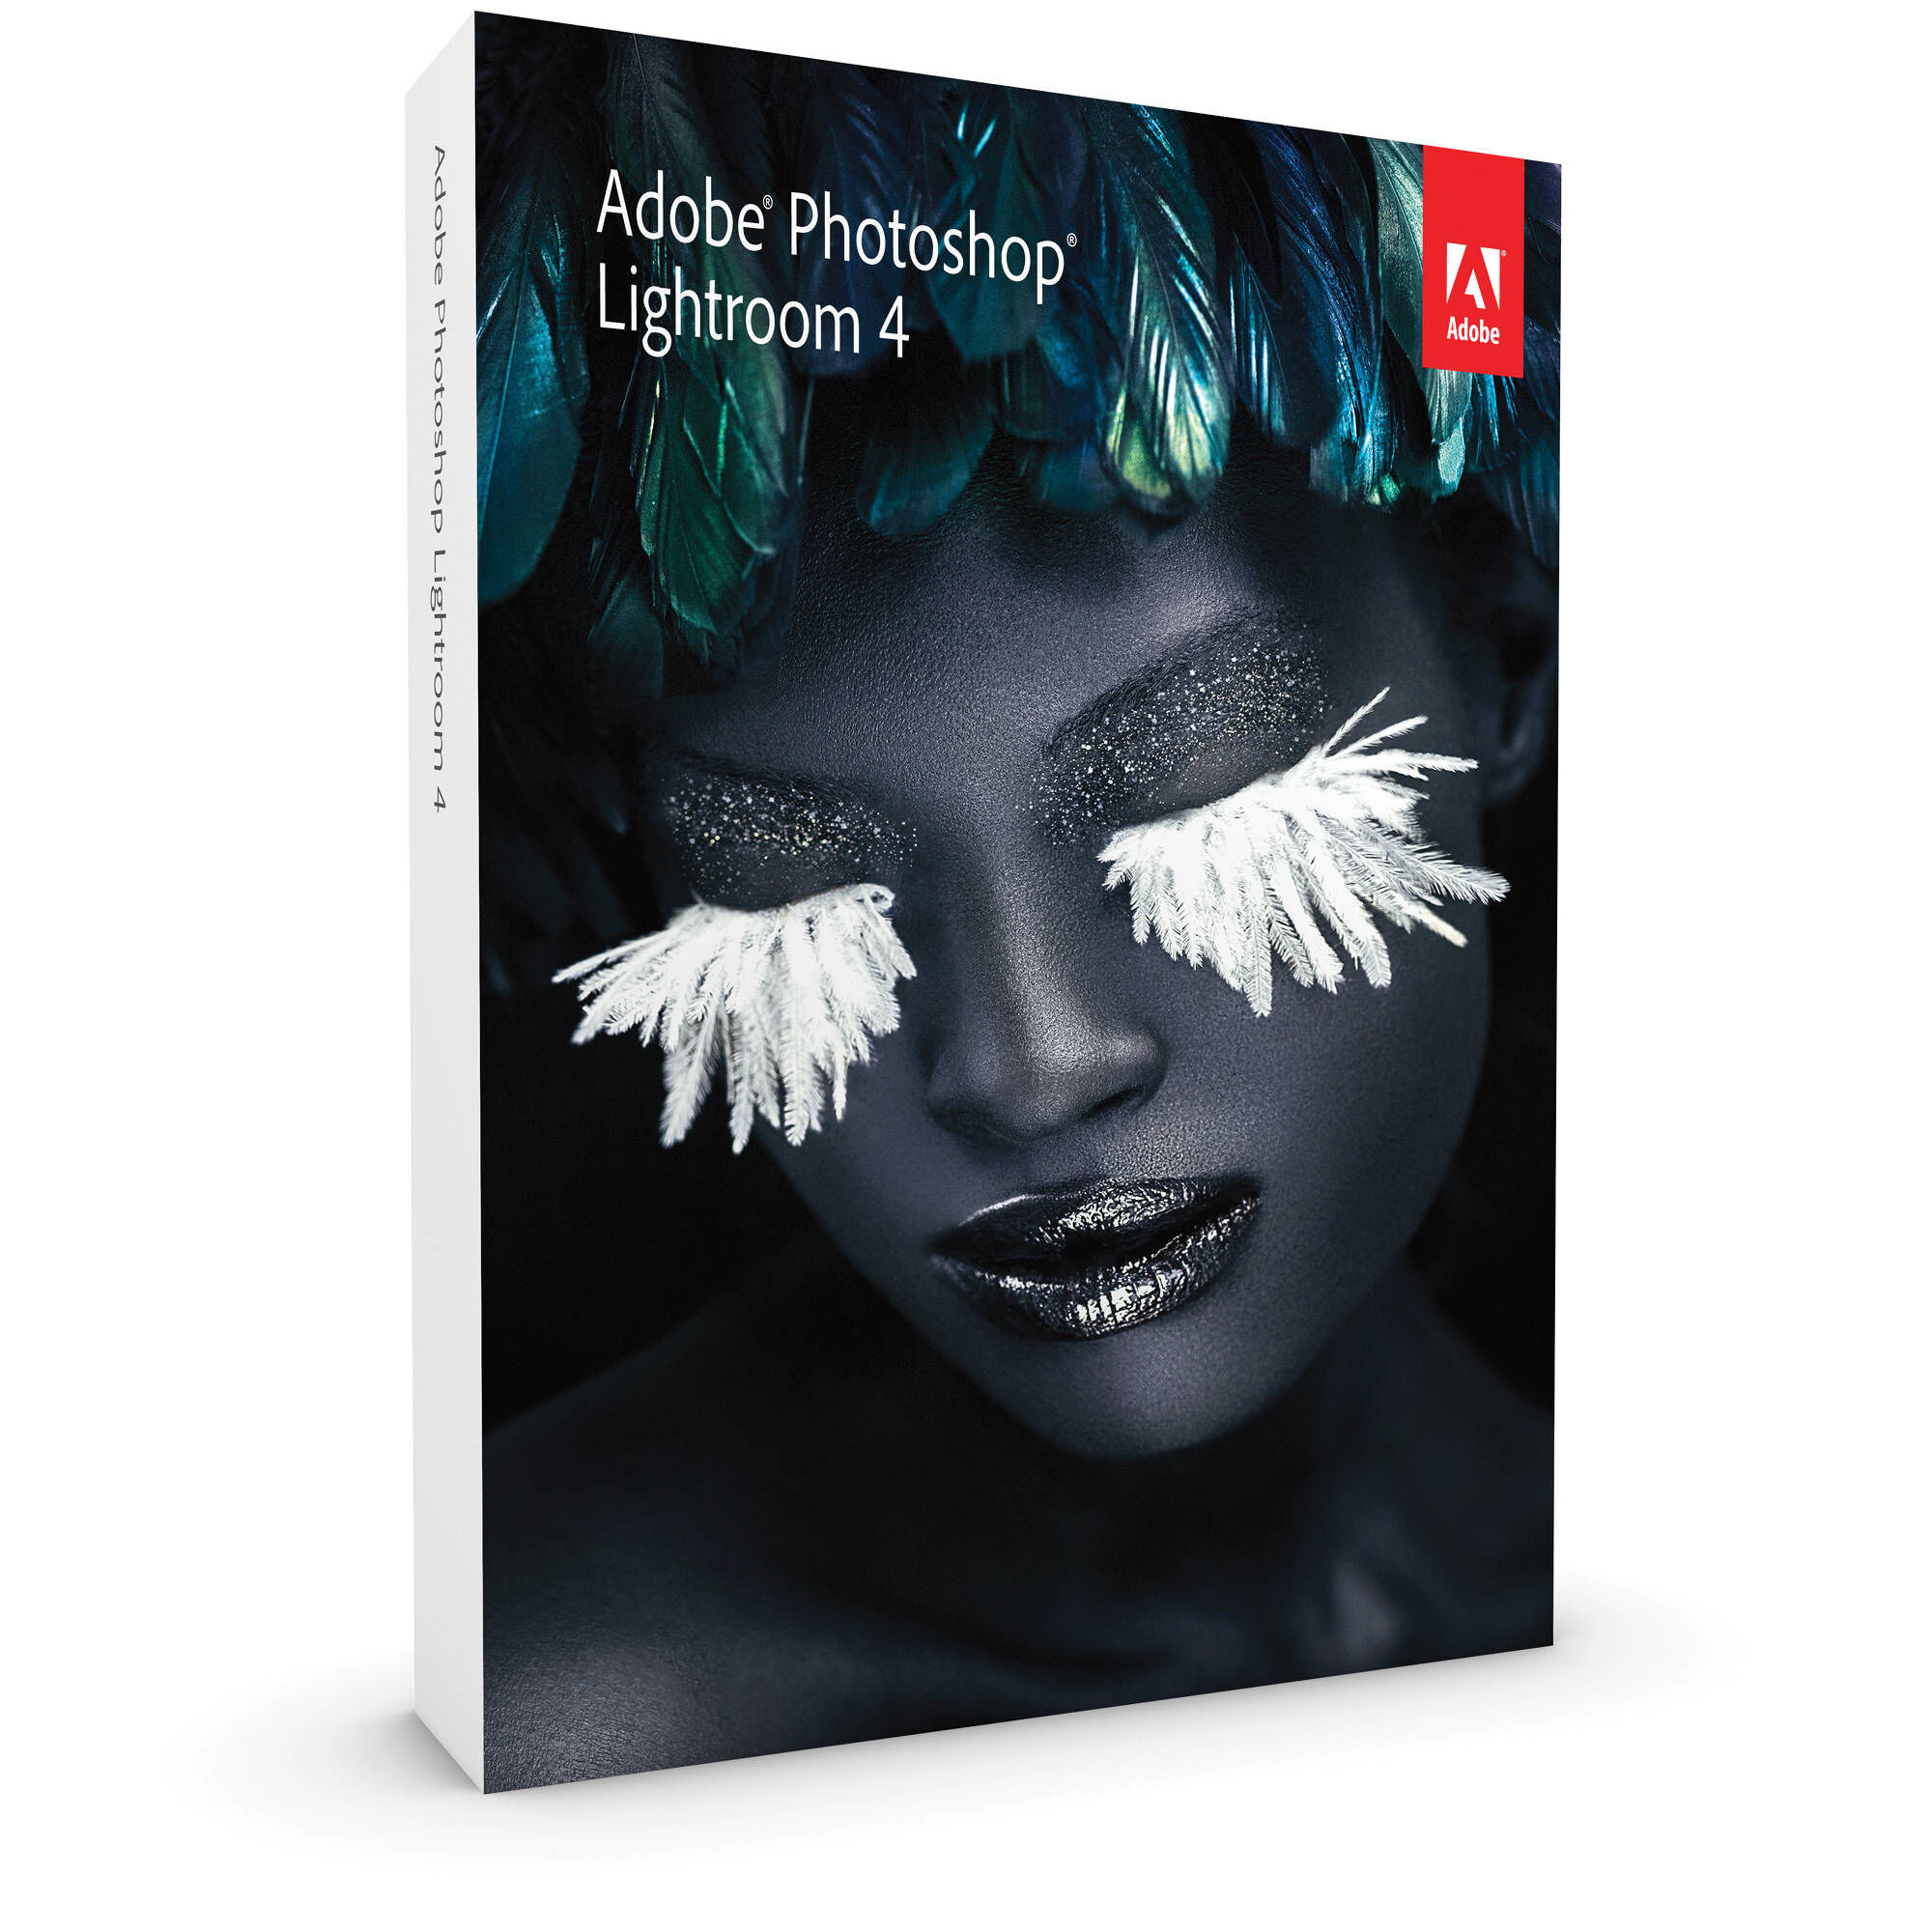 Adobe Photoshop Lightroom 4 | Adobe Wiki | Fandom